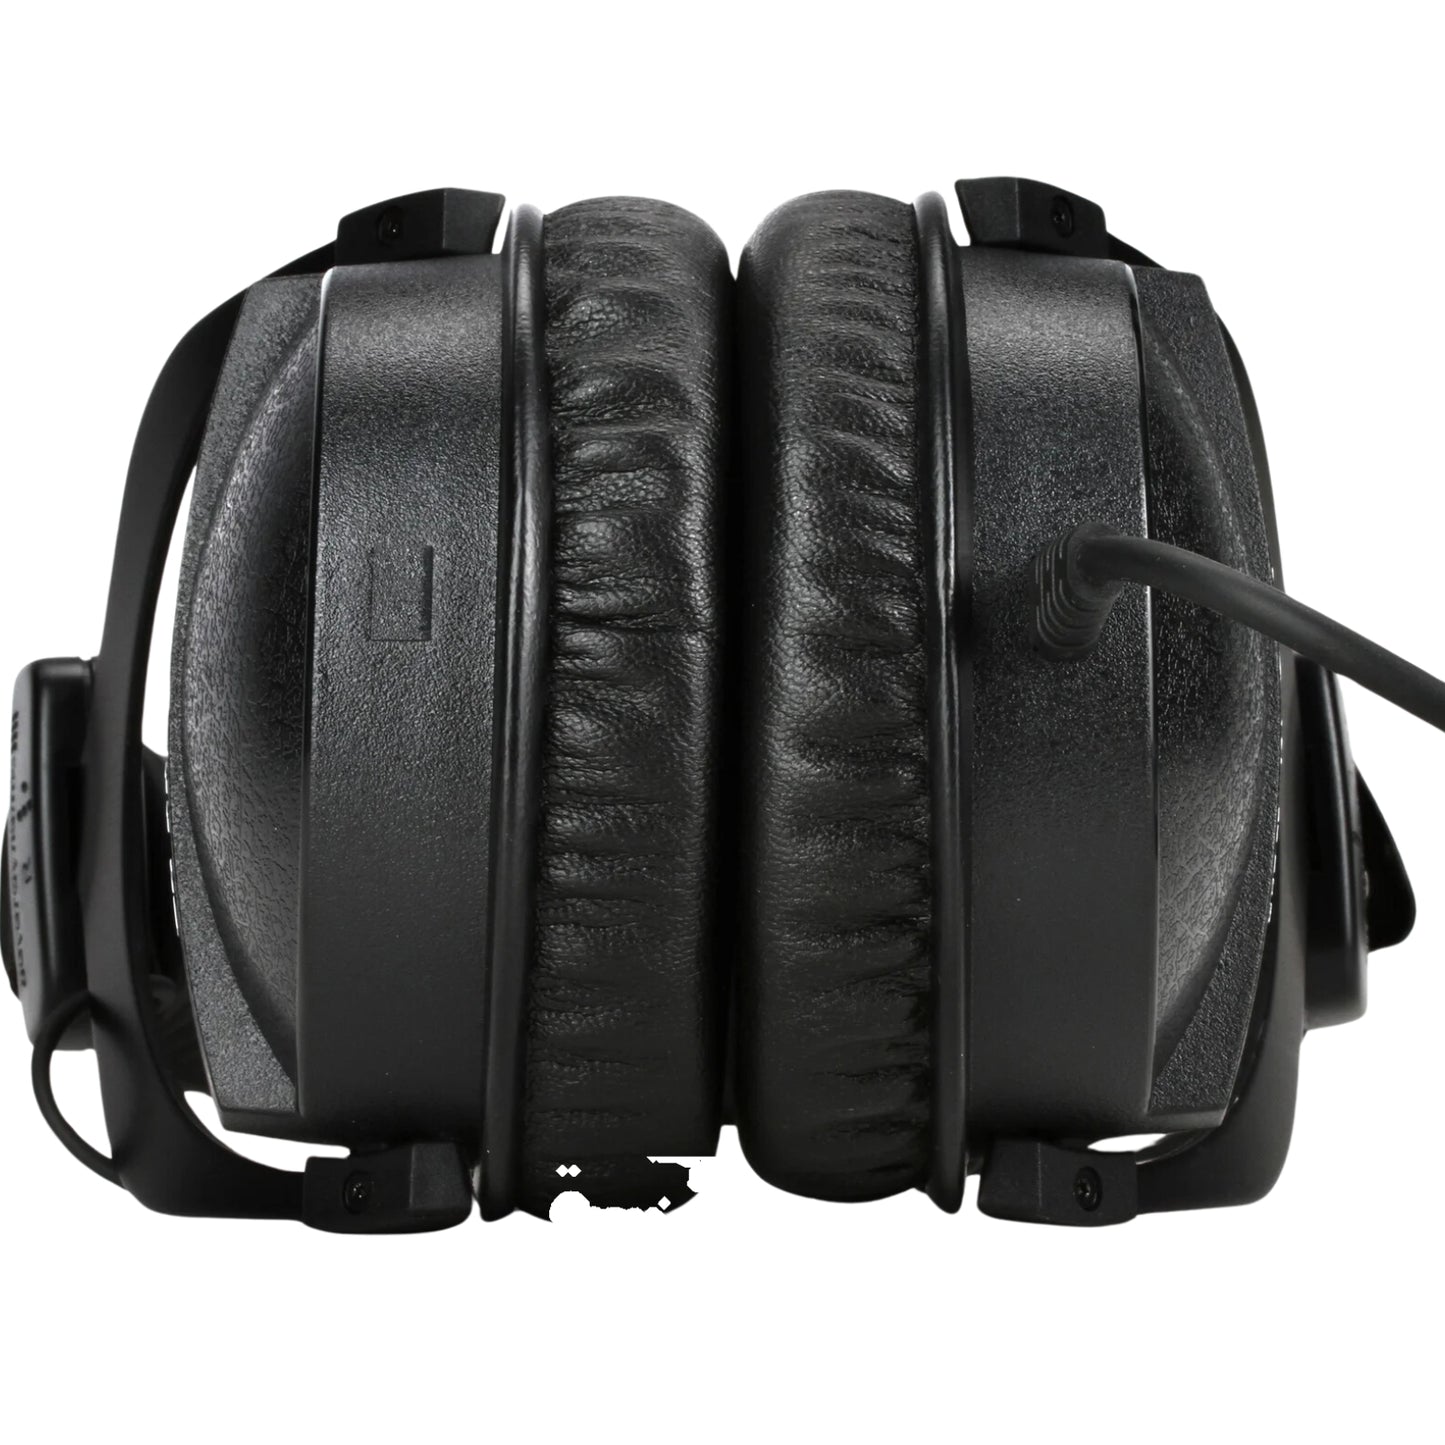 Beyerdynamic DT 770 M 80 Ohm Headphones Gray - MyMobile